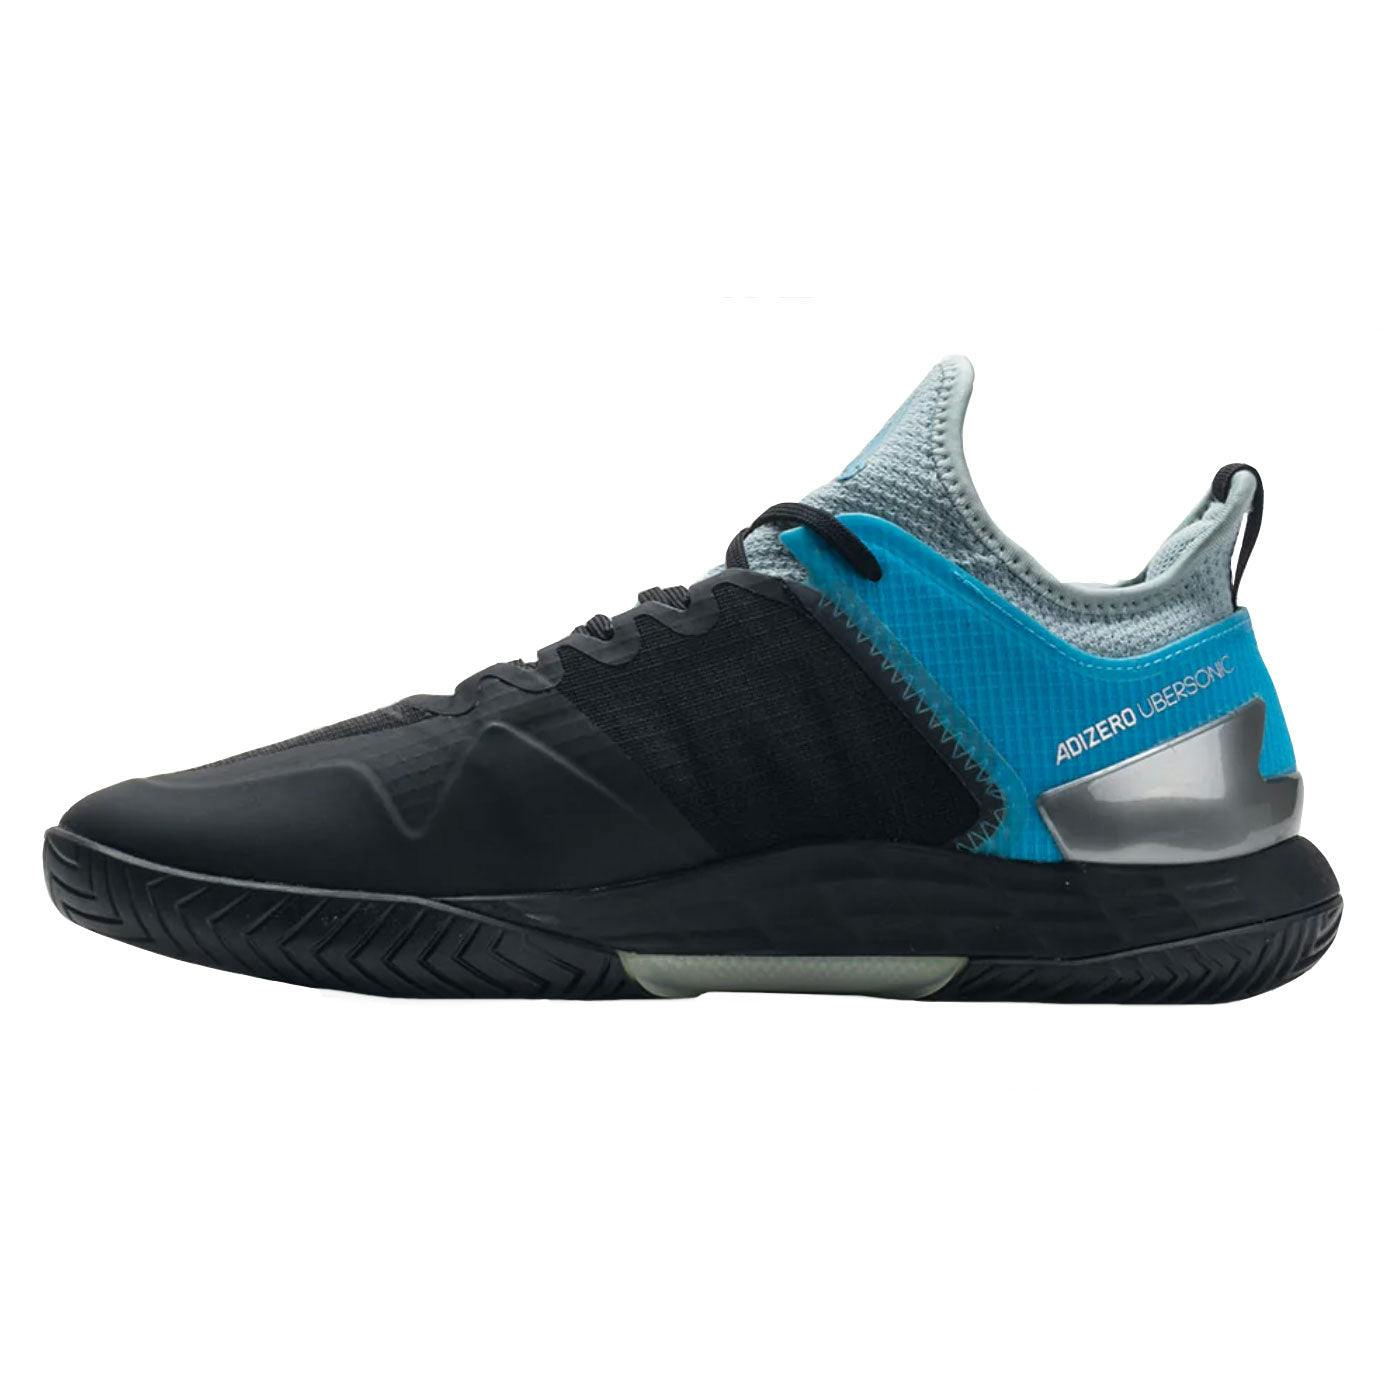 Adidas Adizero Ubersonic 4 Heat Rdy Grey Mens Tennis Shoes - GRY/WHT/BLK 037 / D Medium / 13.0